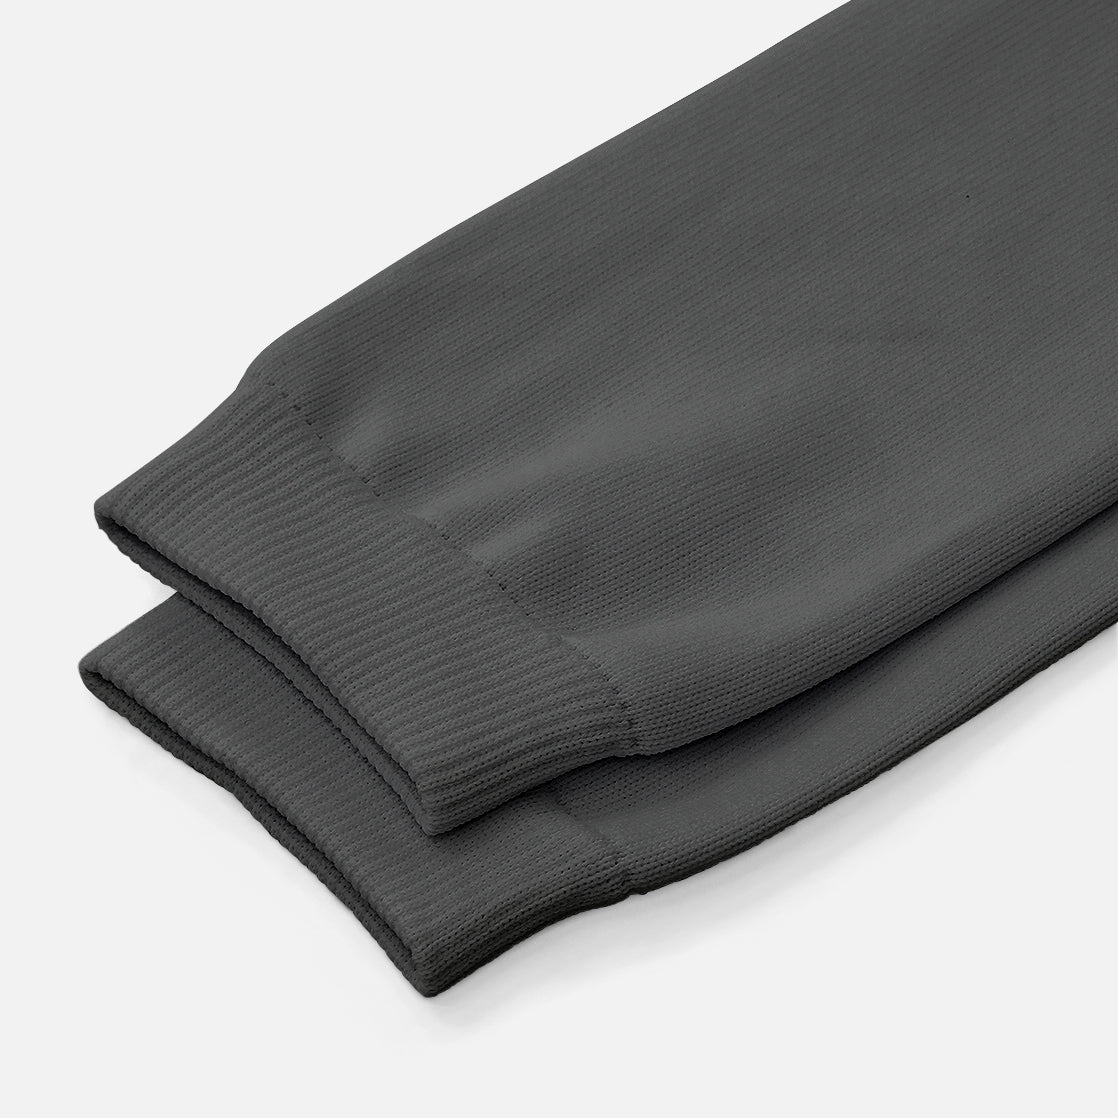 Hue Dark Gray Knitted Compression Calf Sleeves